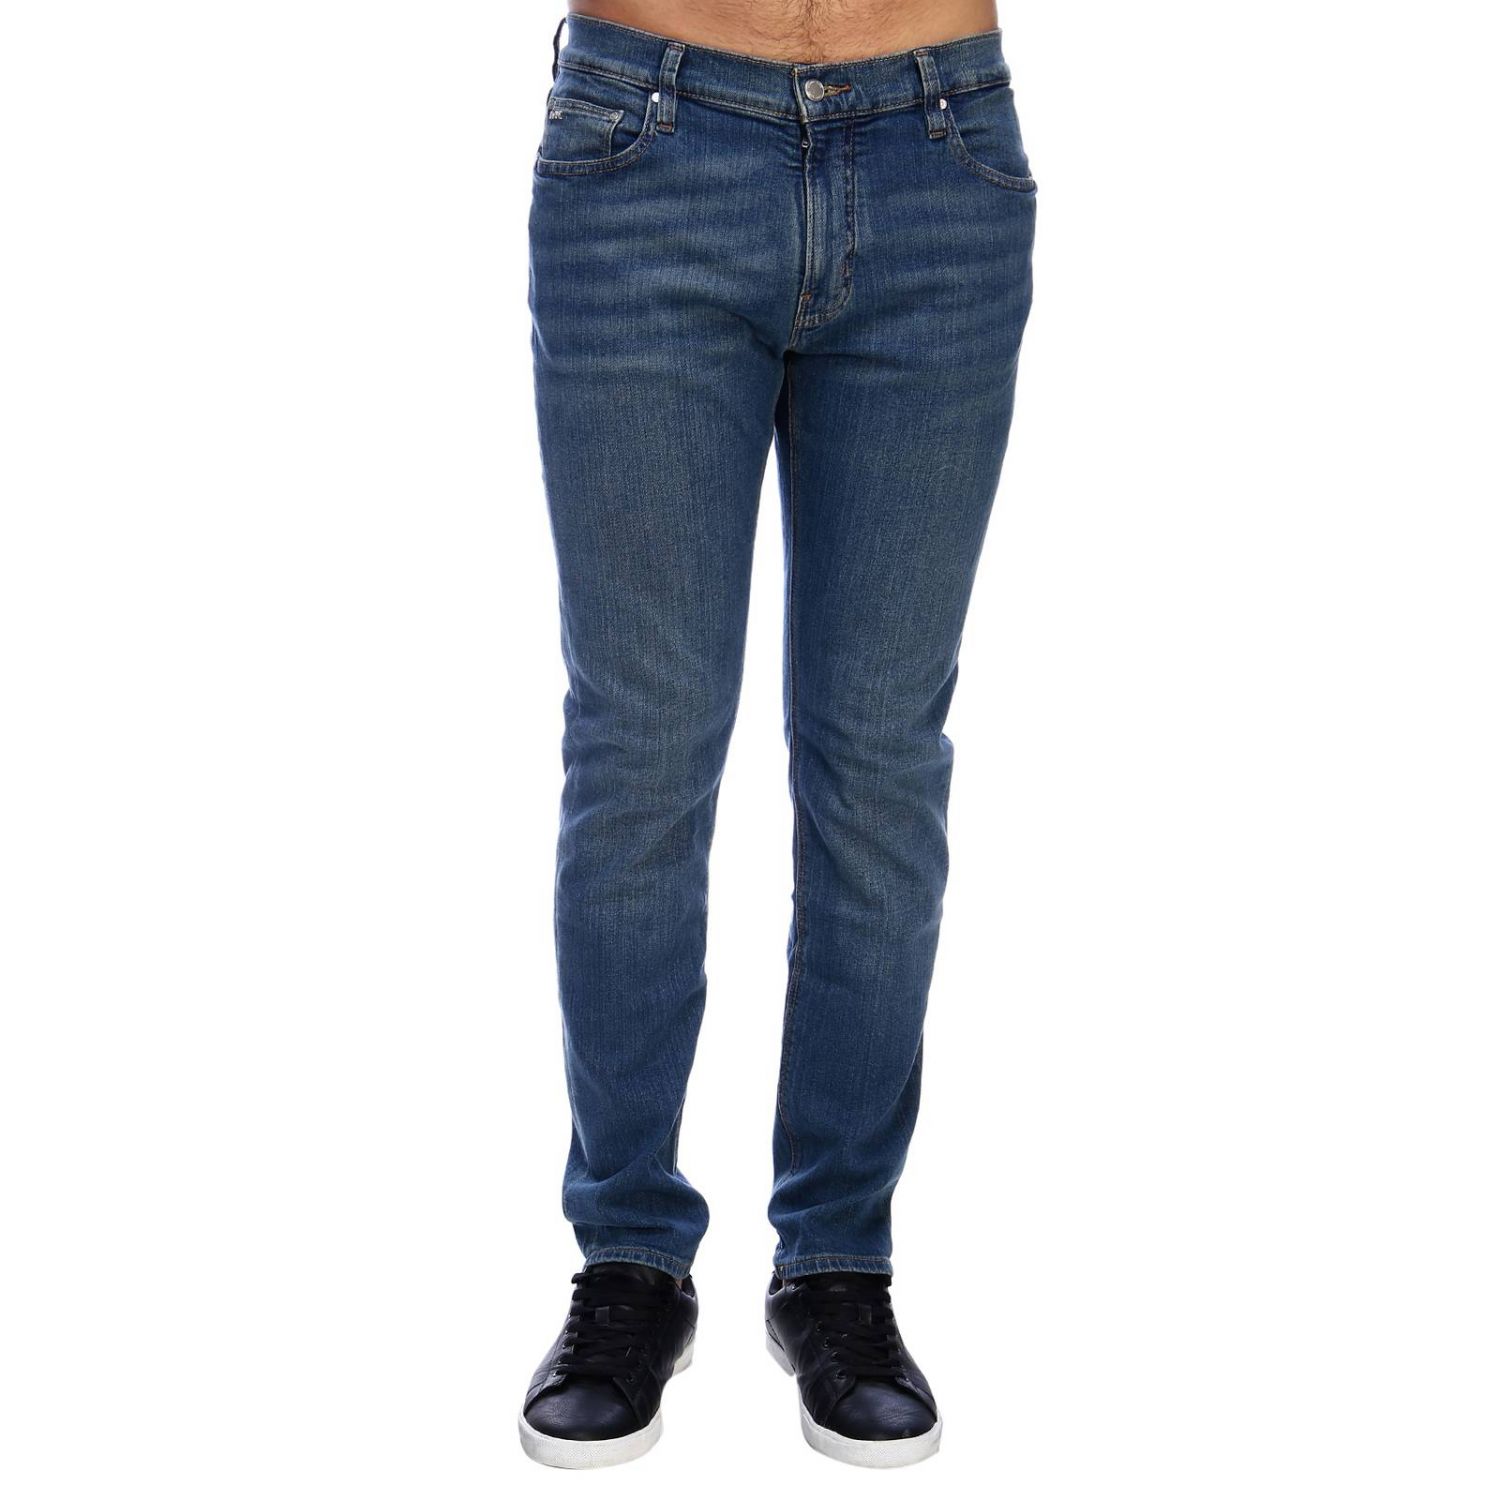 michael kors jeans mens